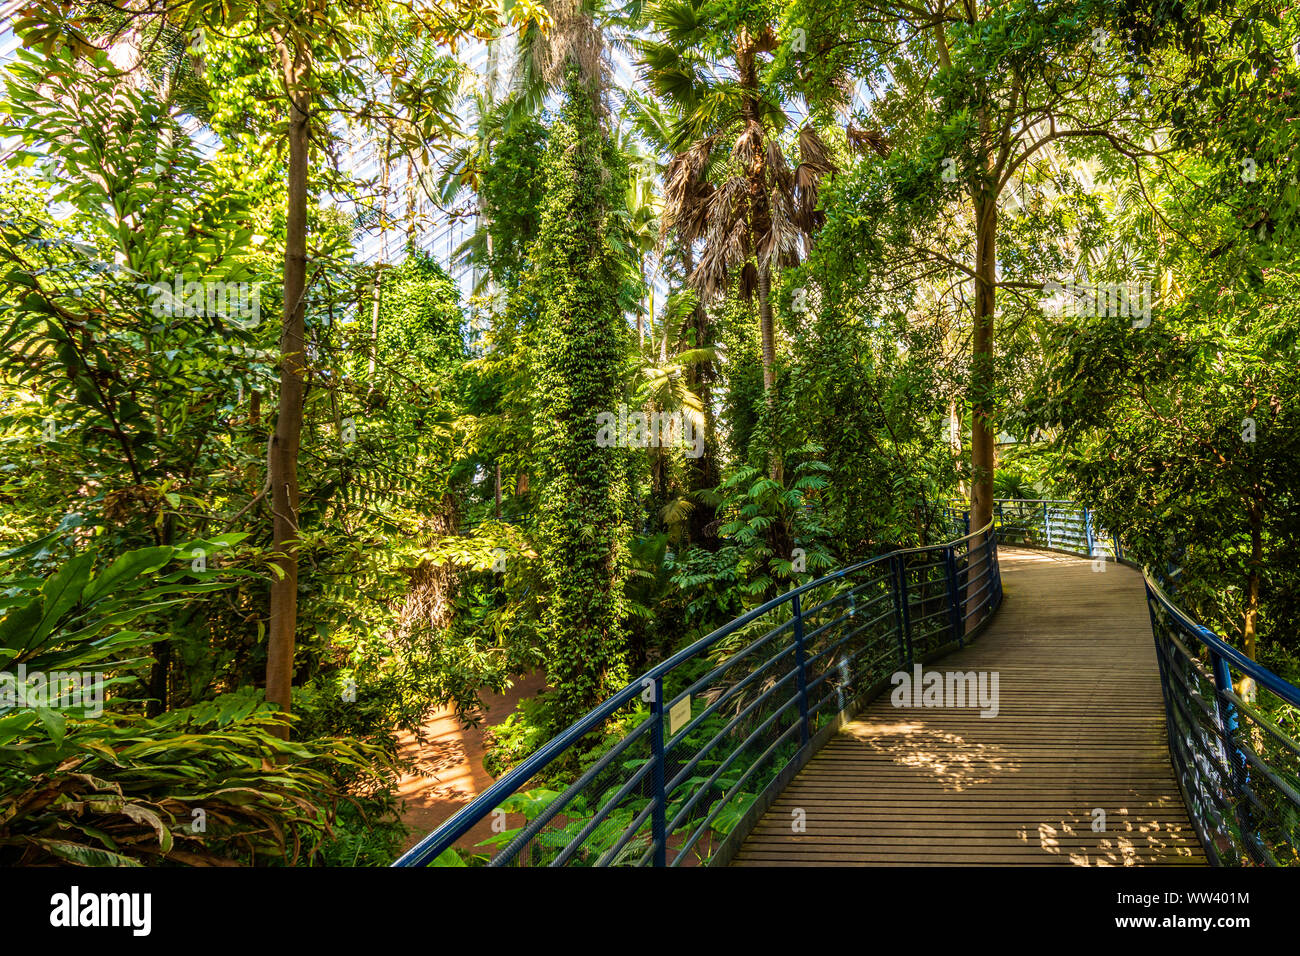 A Walkway through a Tropical Rainforest. Stock Photo